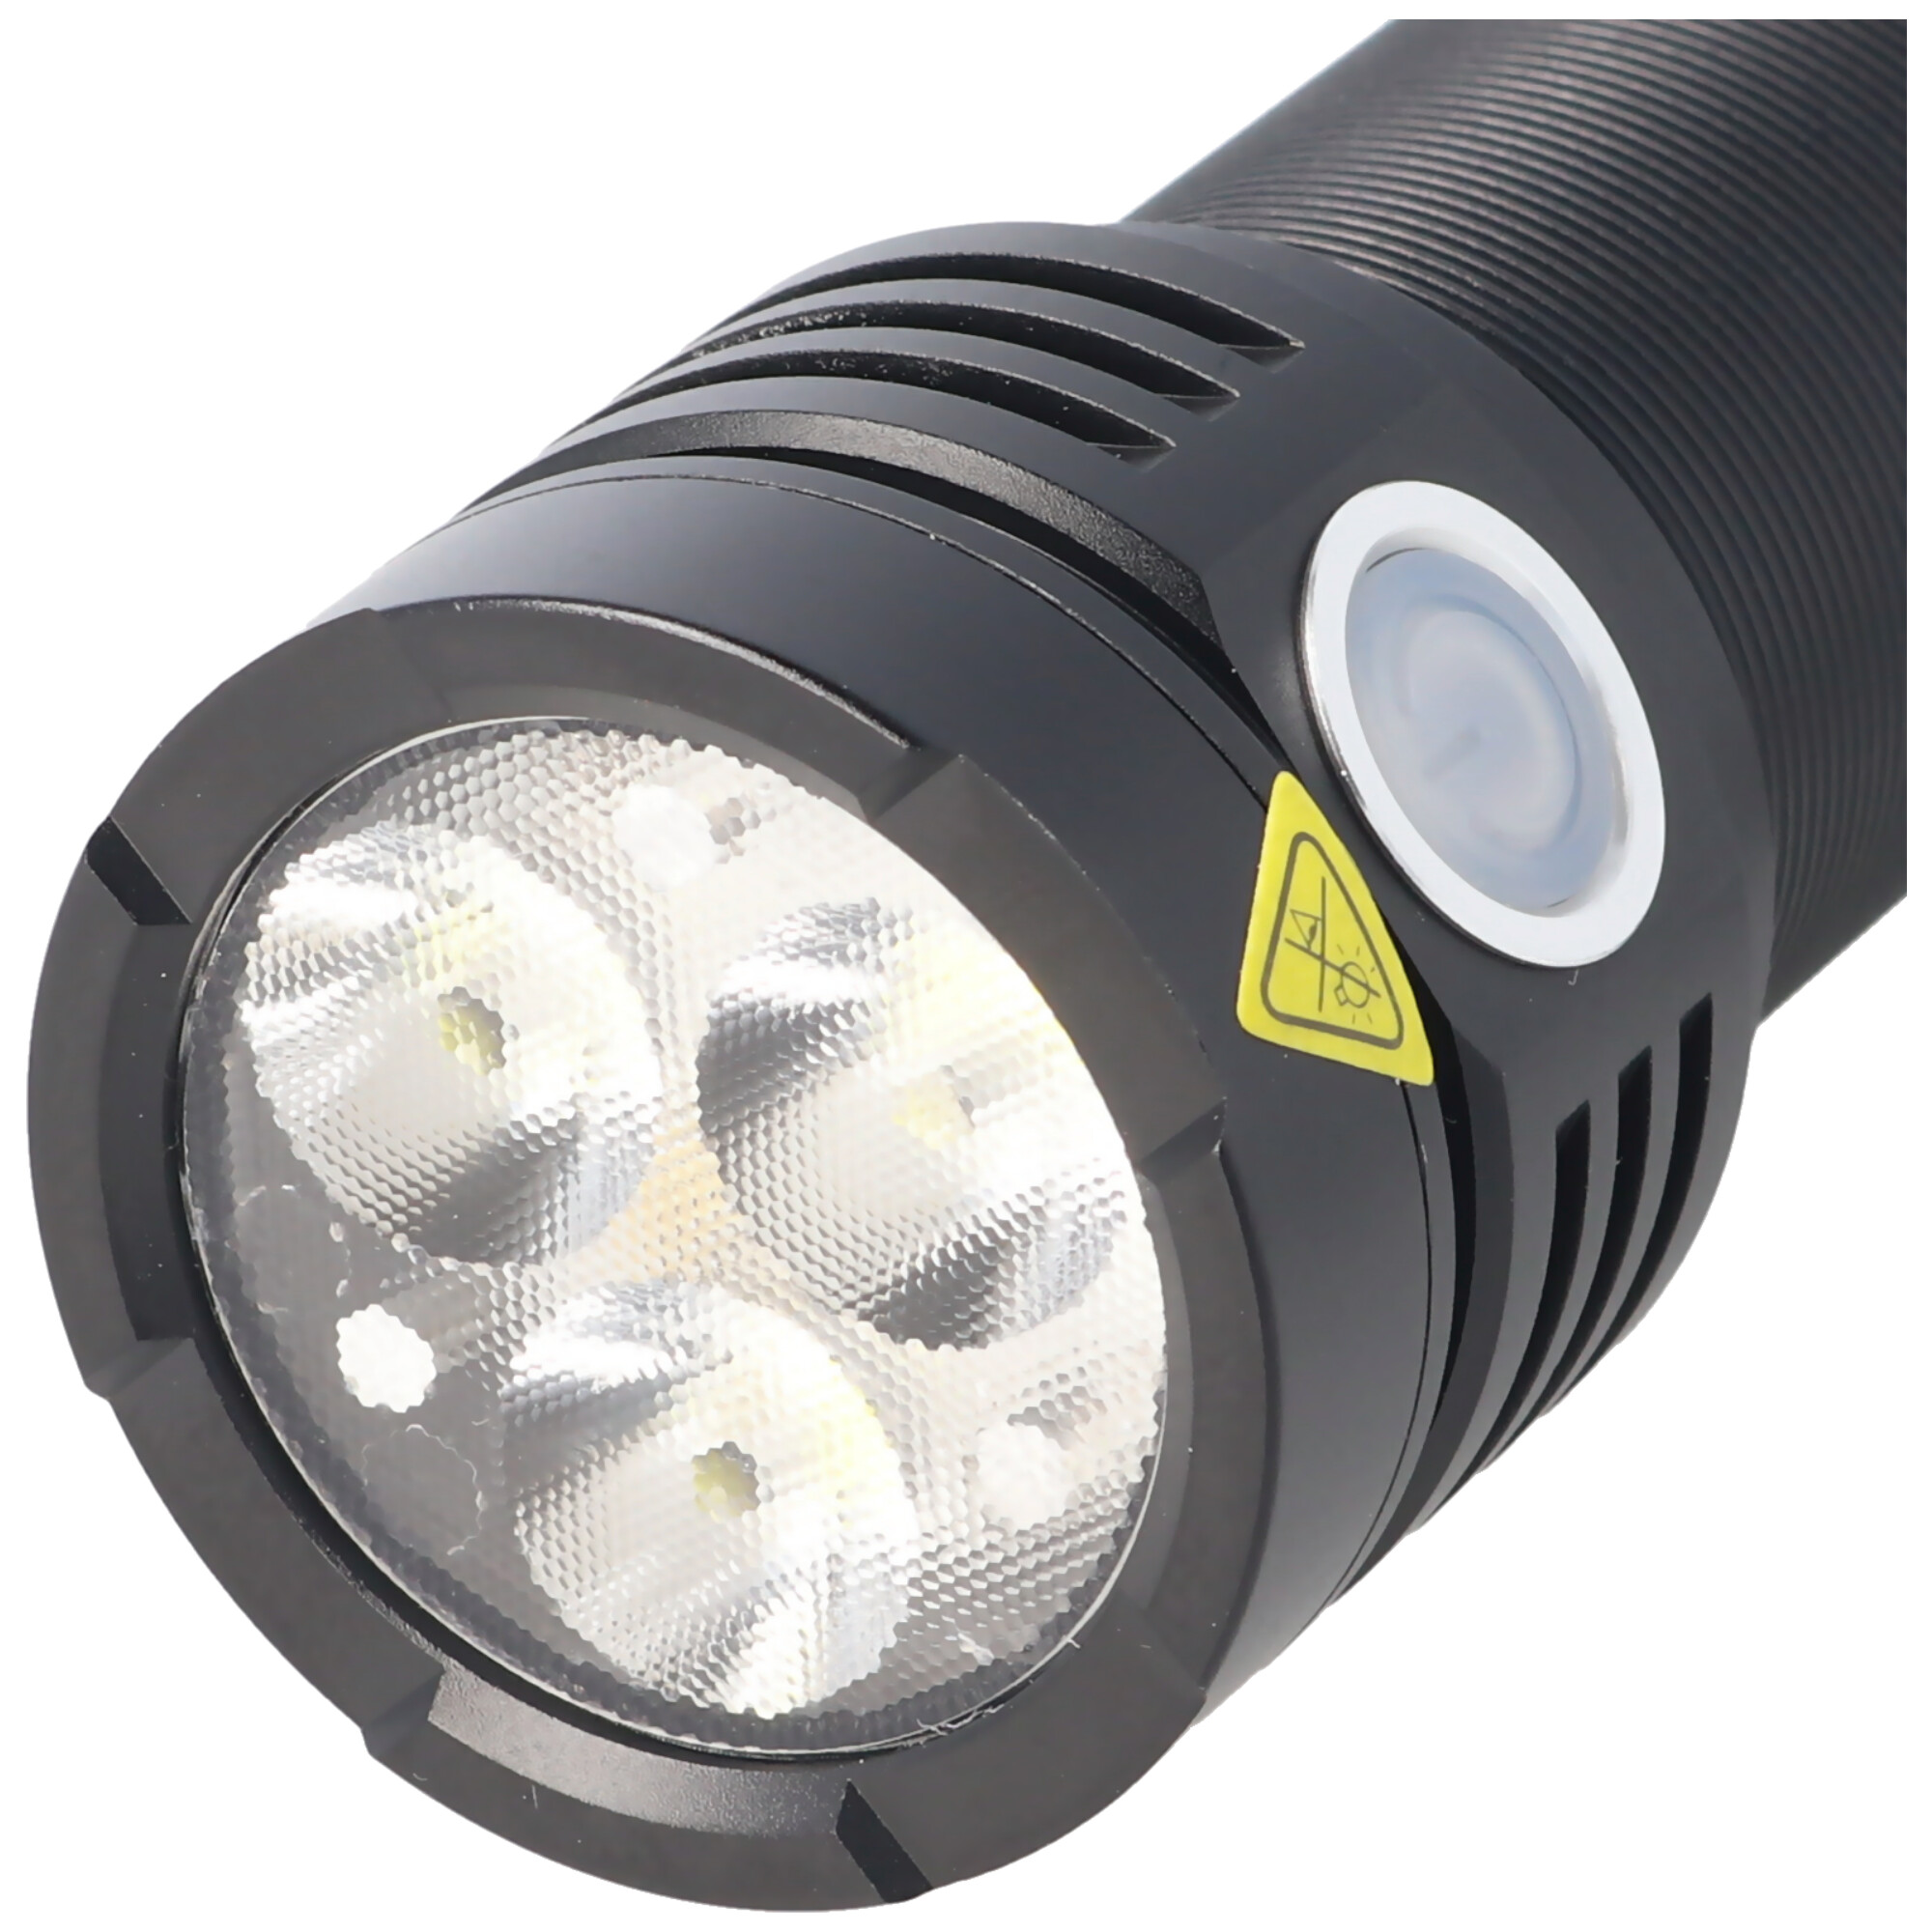 Bullworker die ultrahelle LED-Taschenlampe mit Boost-Funktion, Osram LED max. 3300 Lumen inklusive Akku